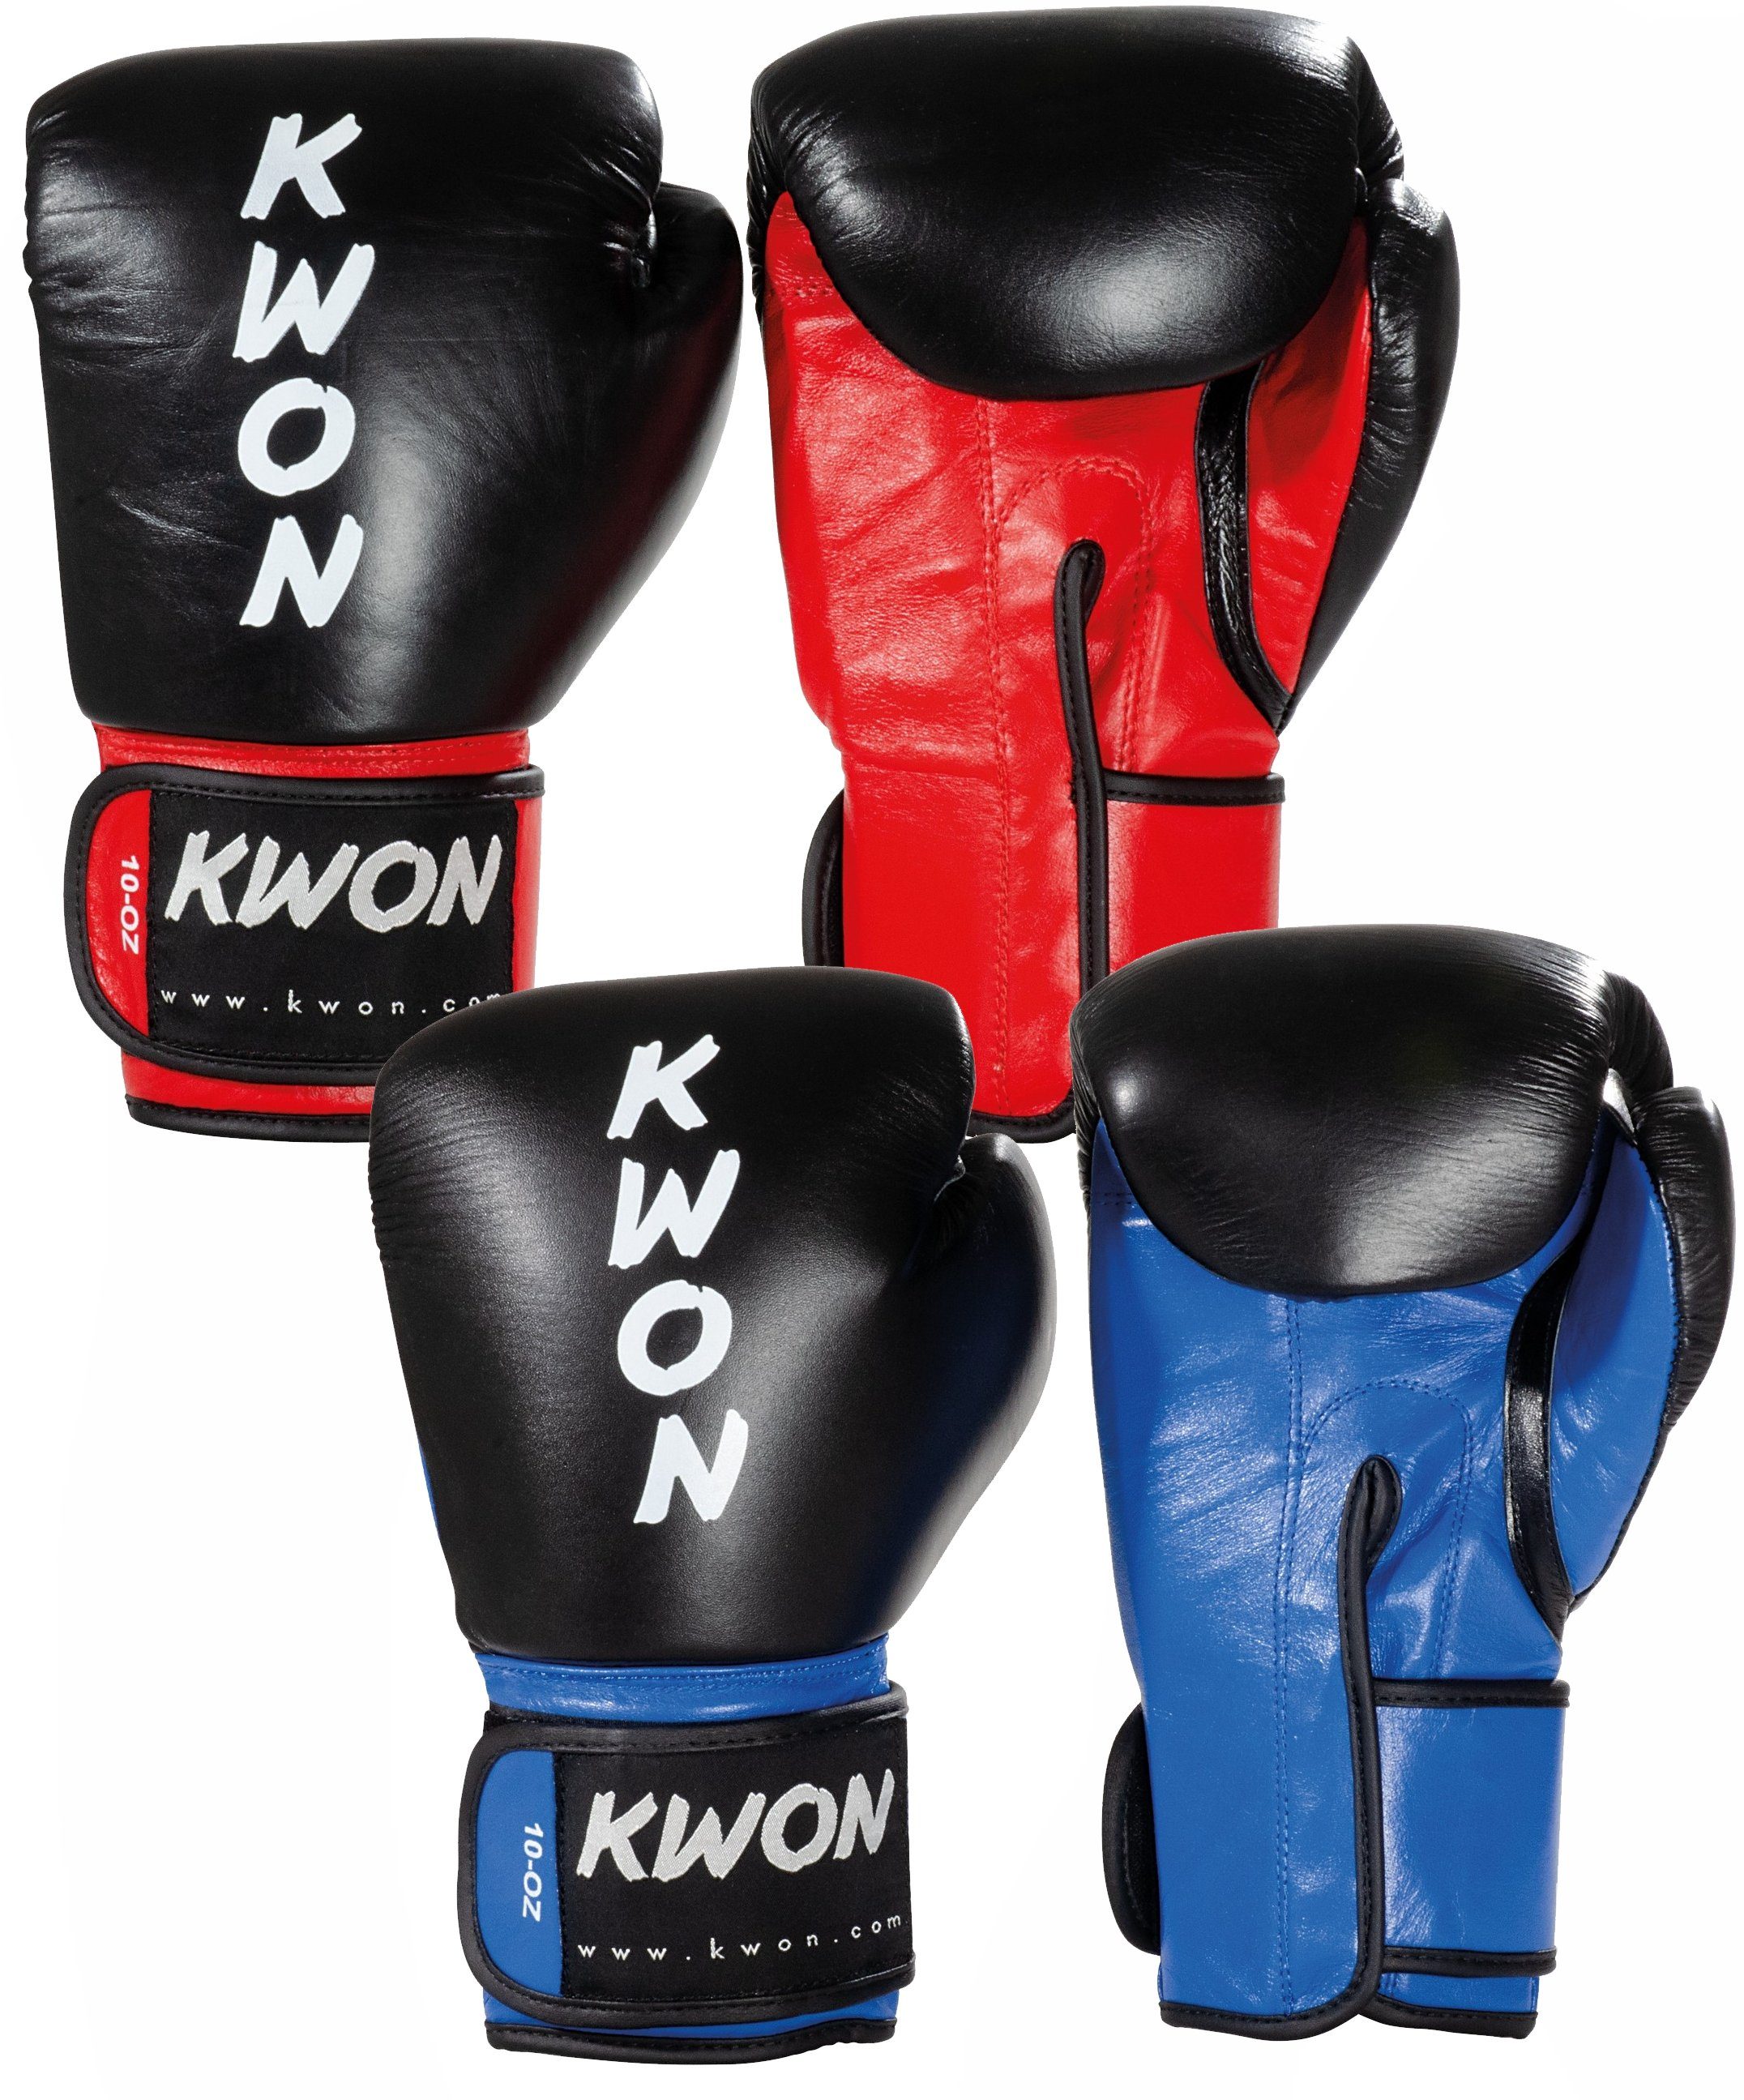 KWON Boxhandschuhe Profi KO Champ Leder Box-Handschuhe Boxen Kickboxen Thaiboxen (Vollkontakt, Paar), Ergo Form, Profi Ausführung, Echtes Leder, WKU anerkannt schwarz/gelb